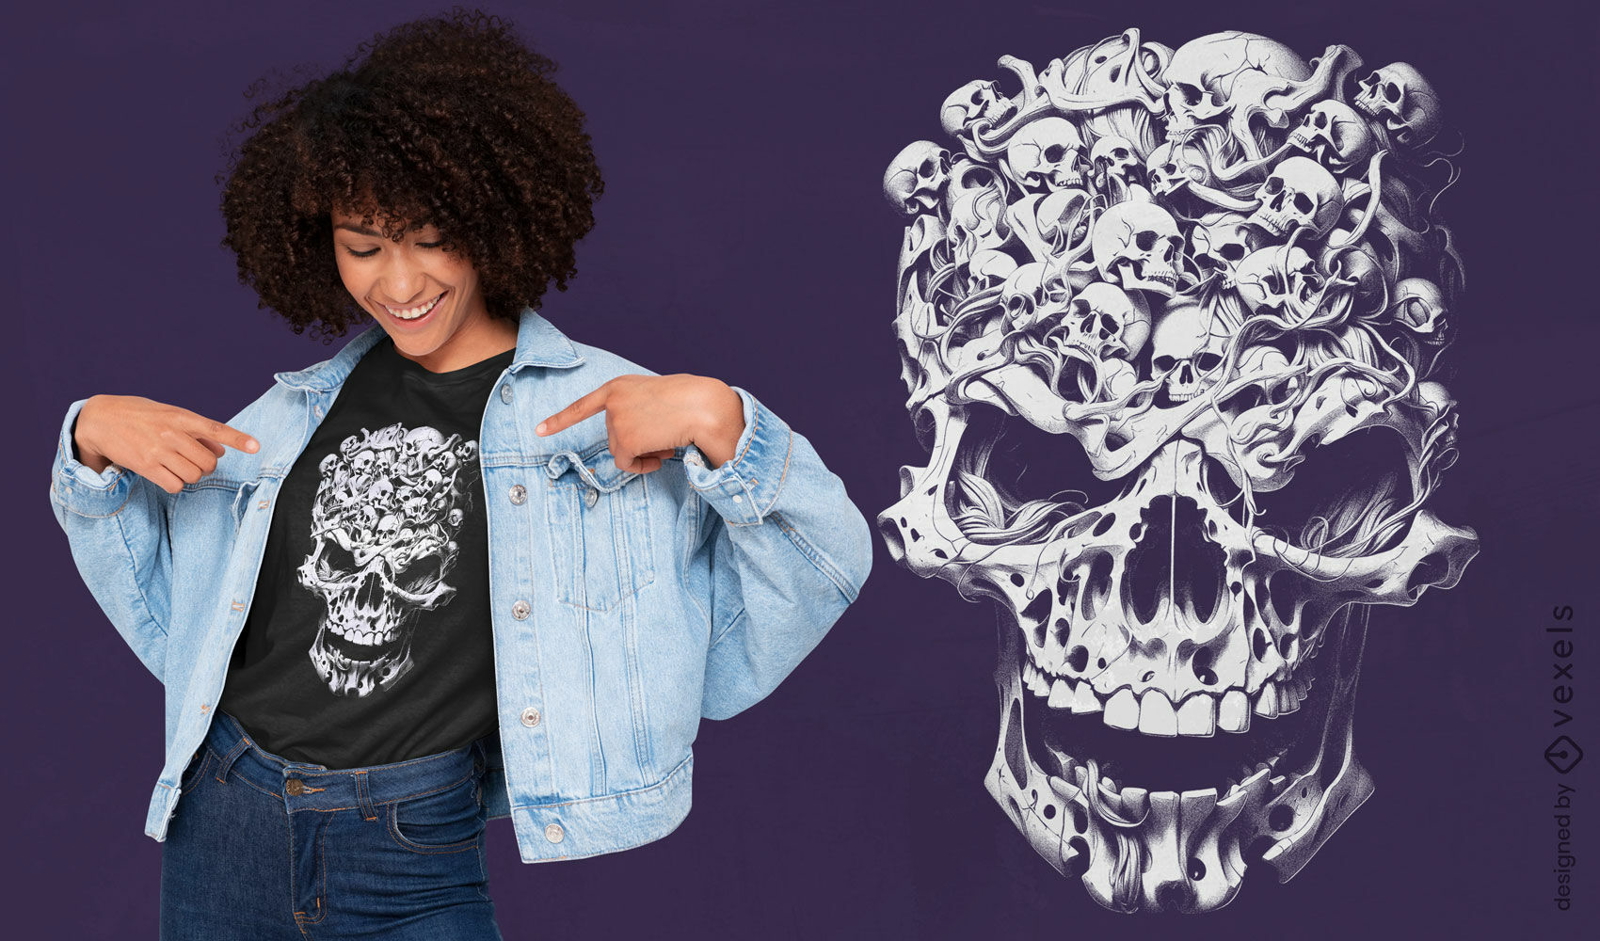 Skull compilation t-shirt design